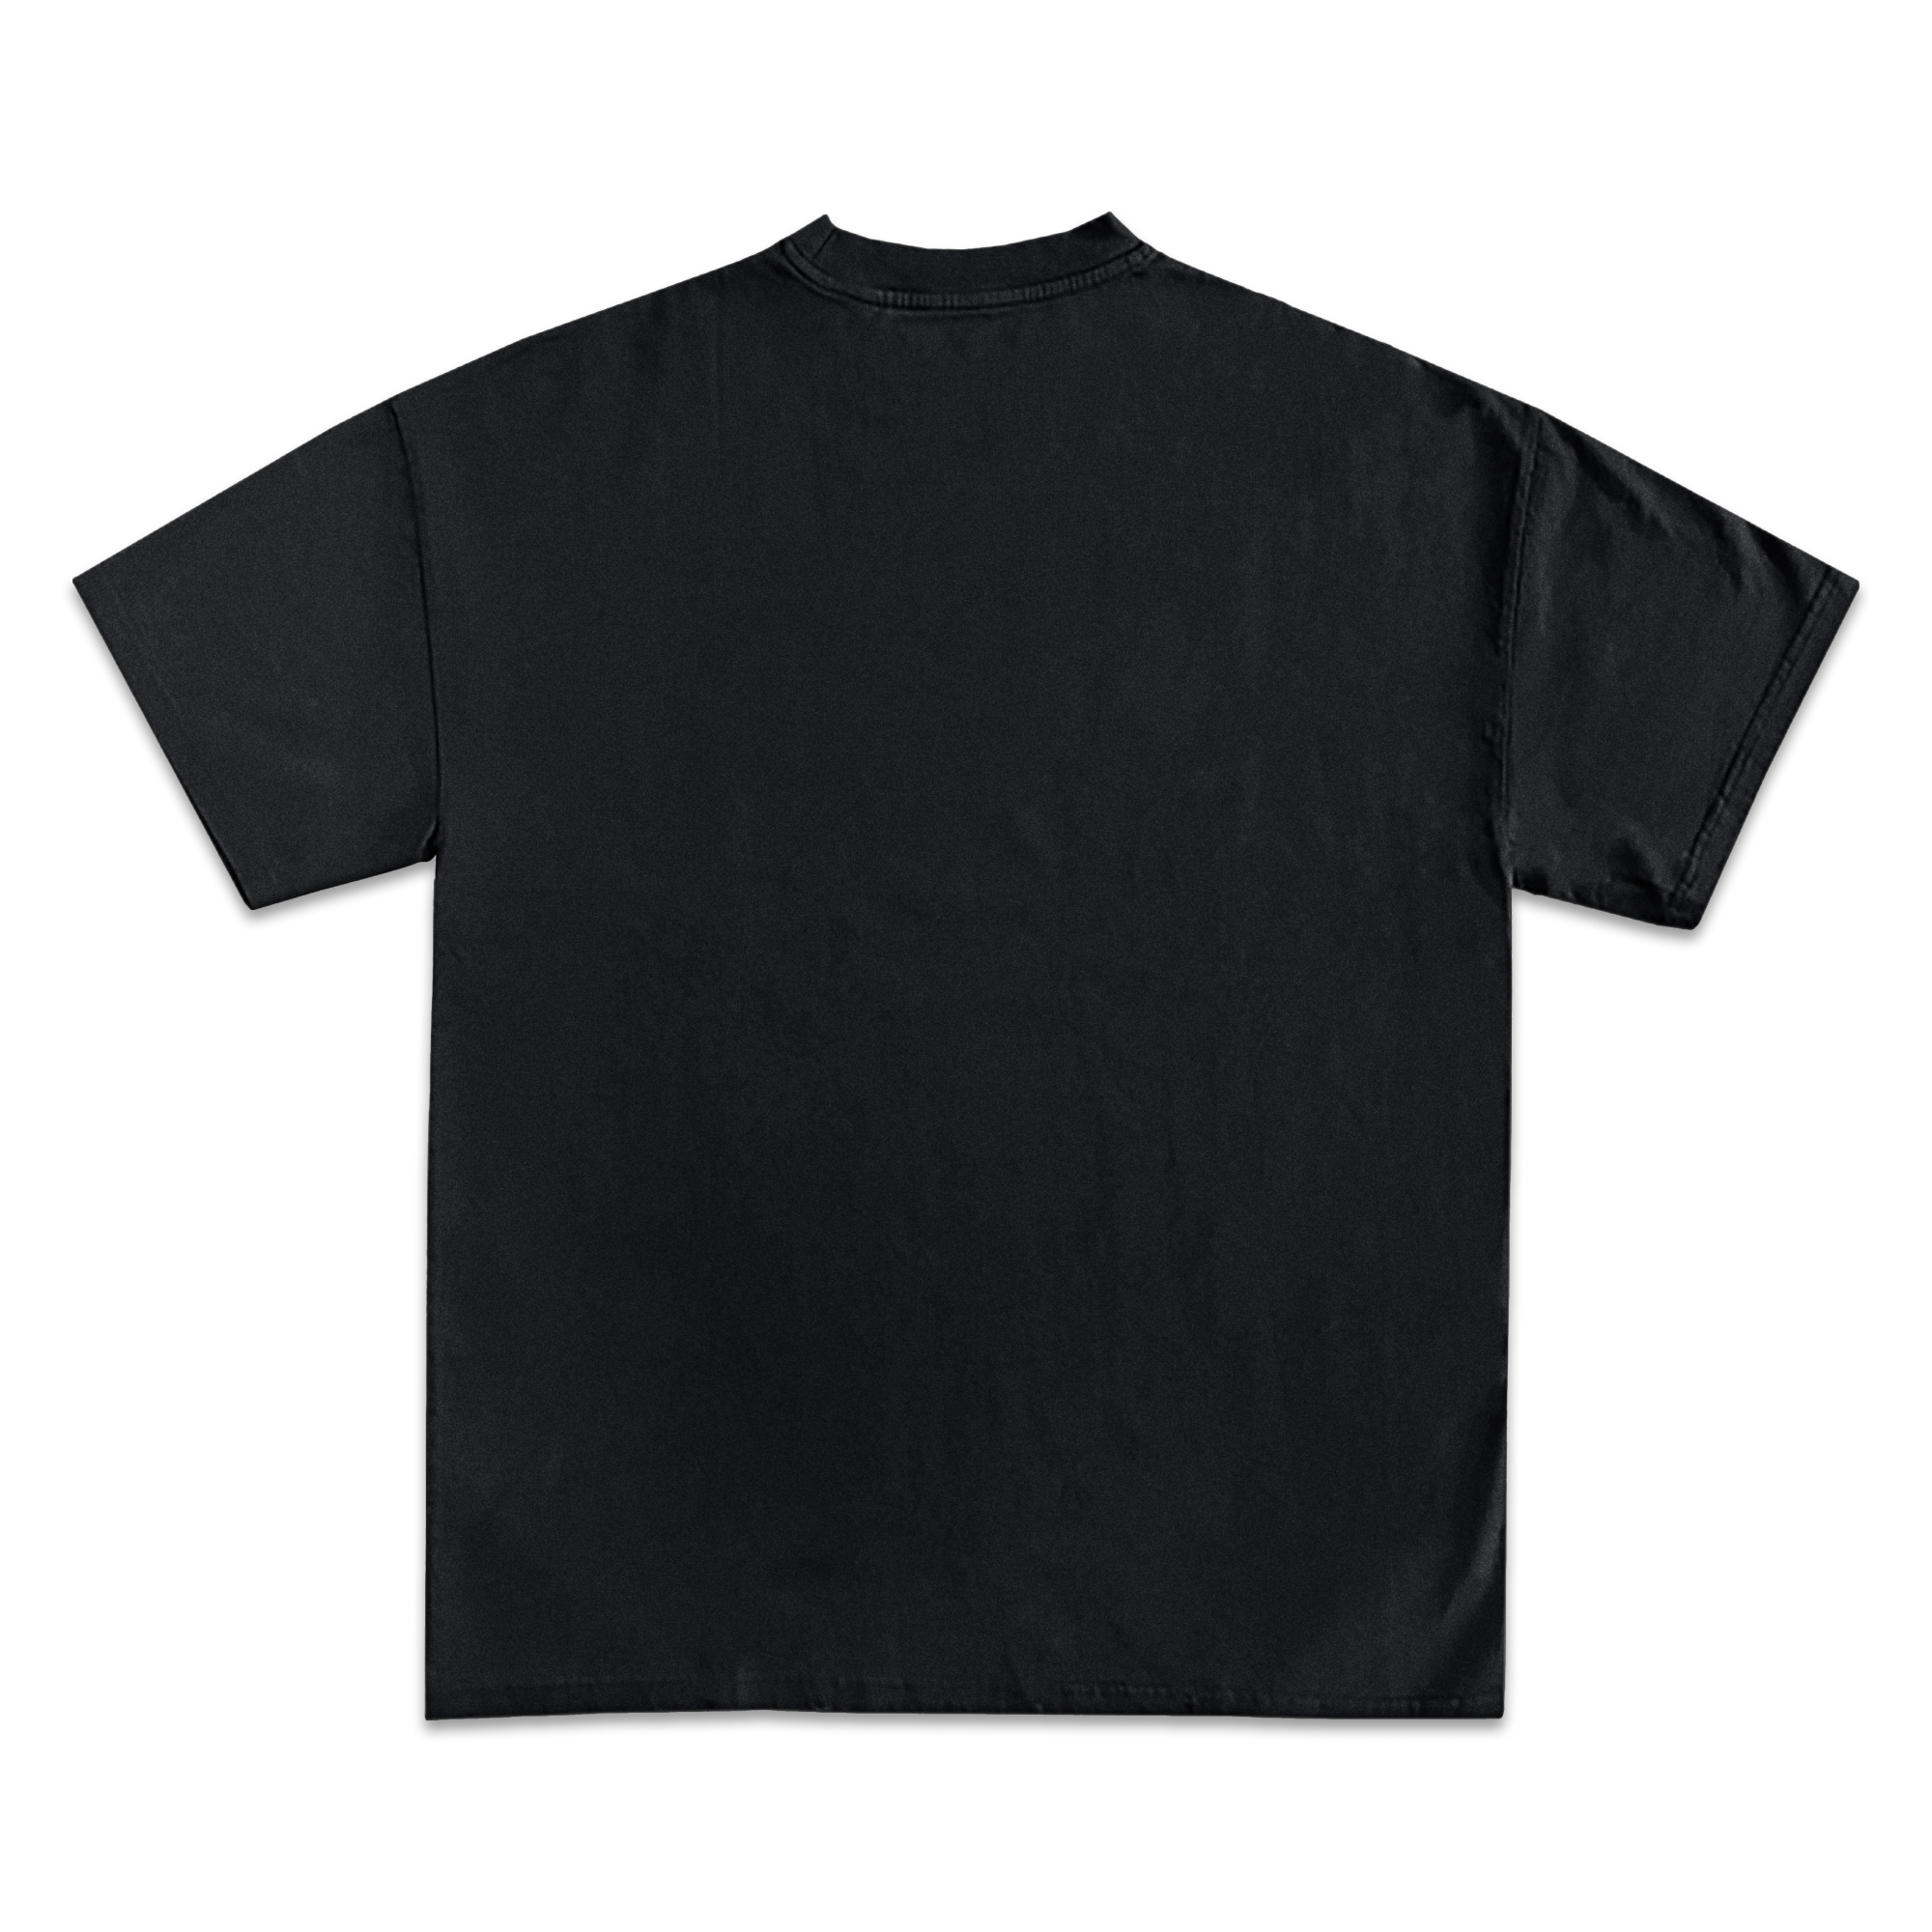 The Jamie Foxx Show Graphic T-Shirt